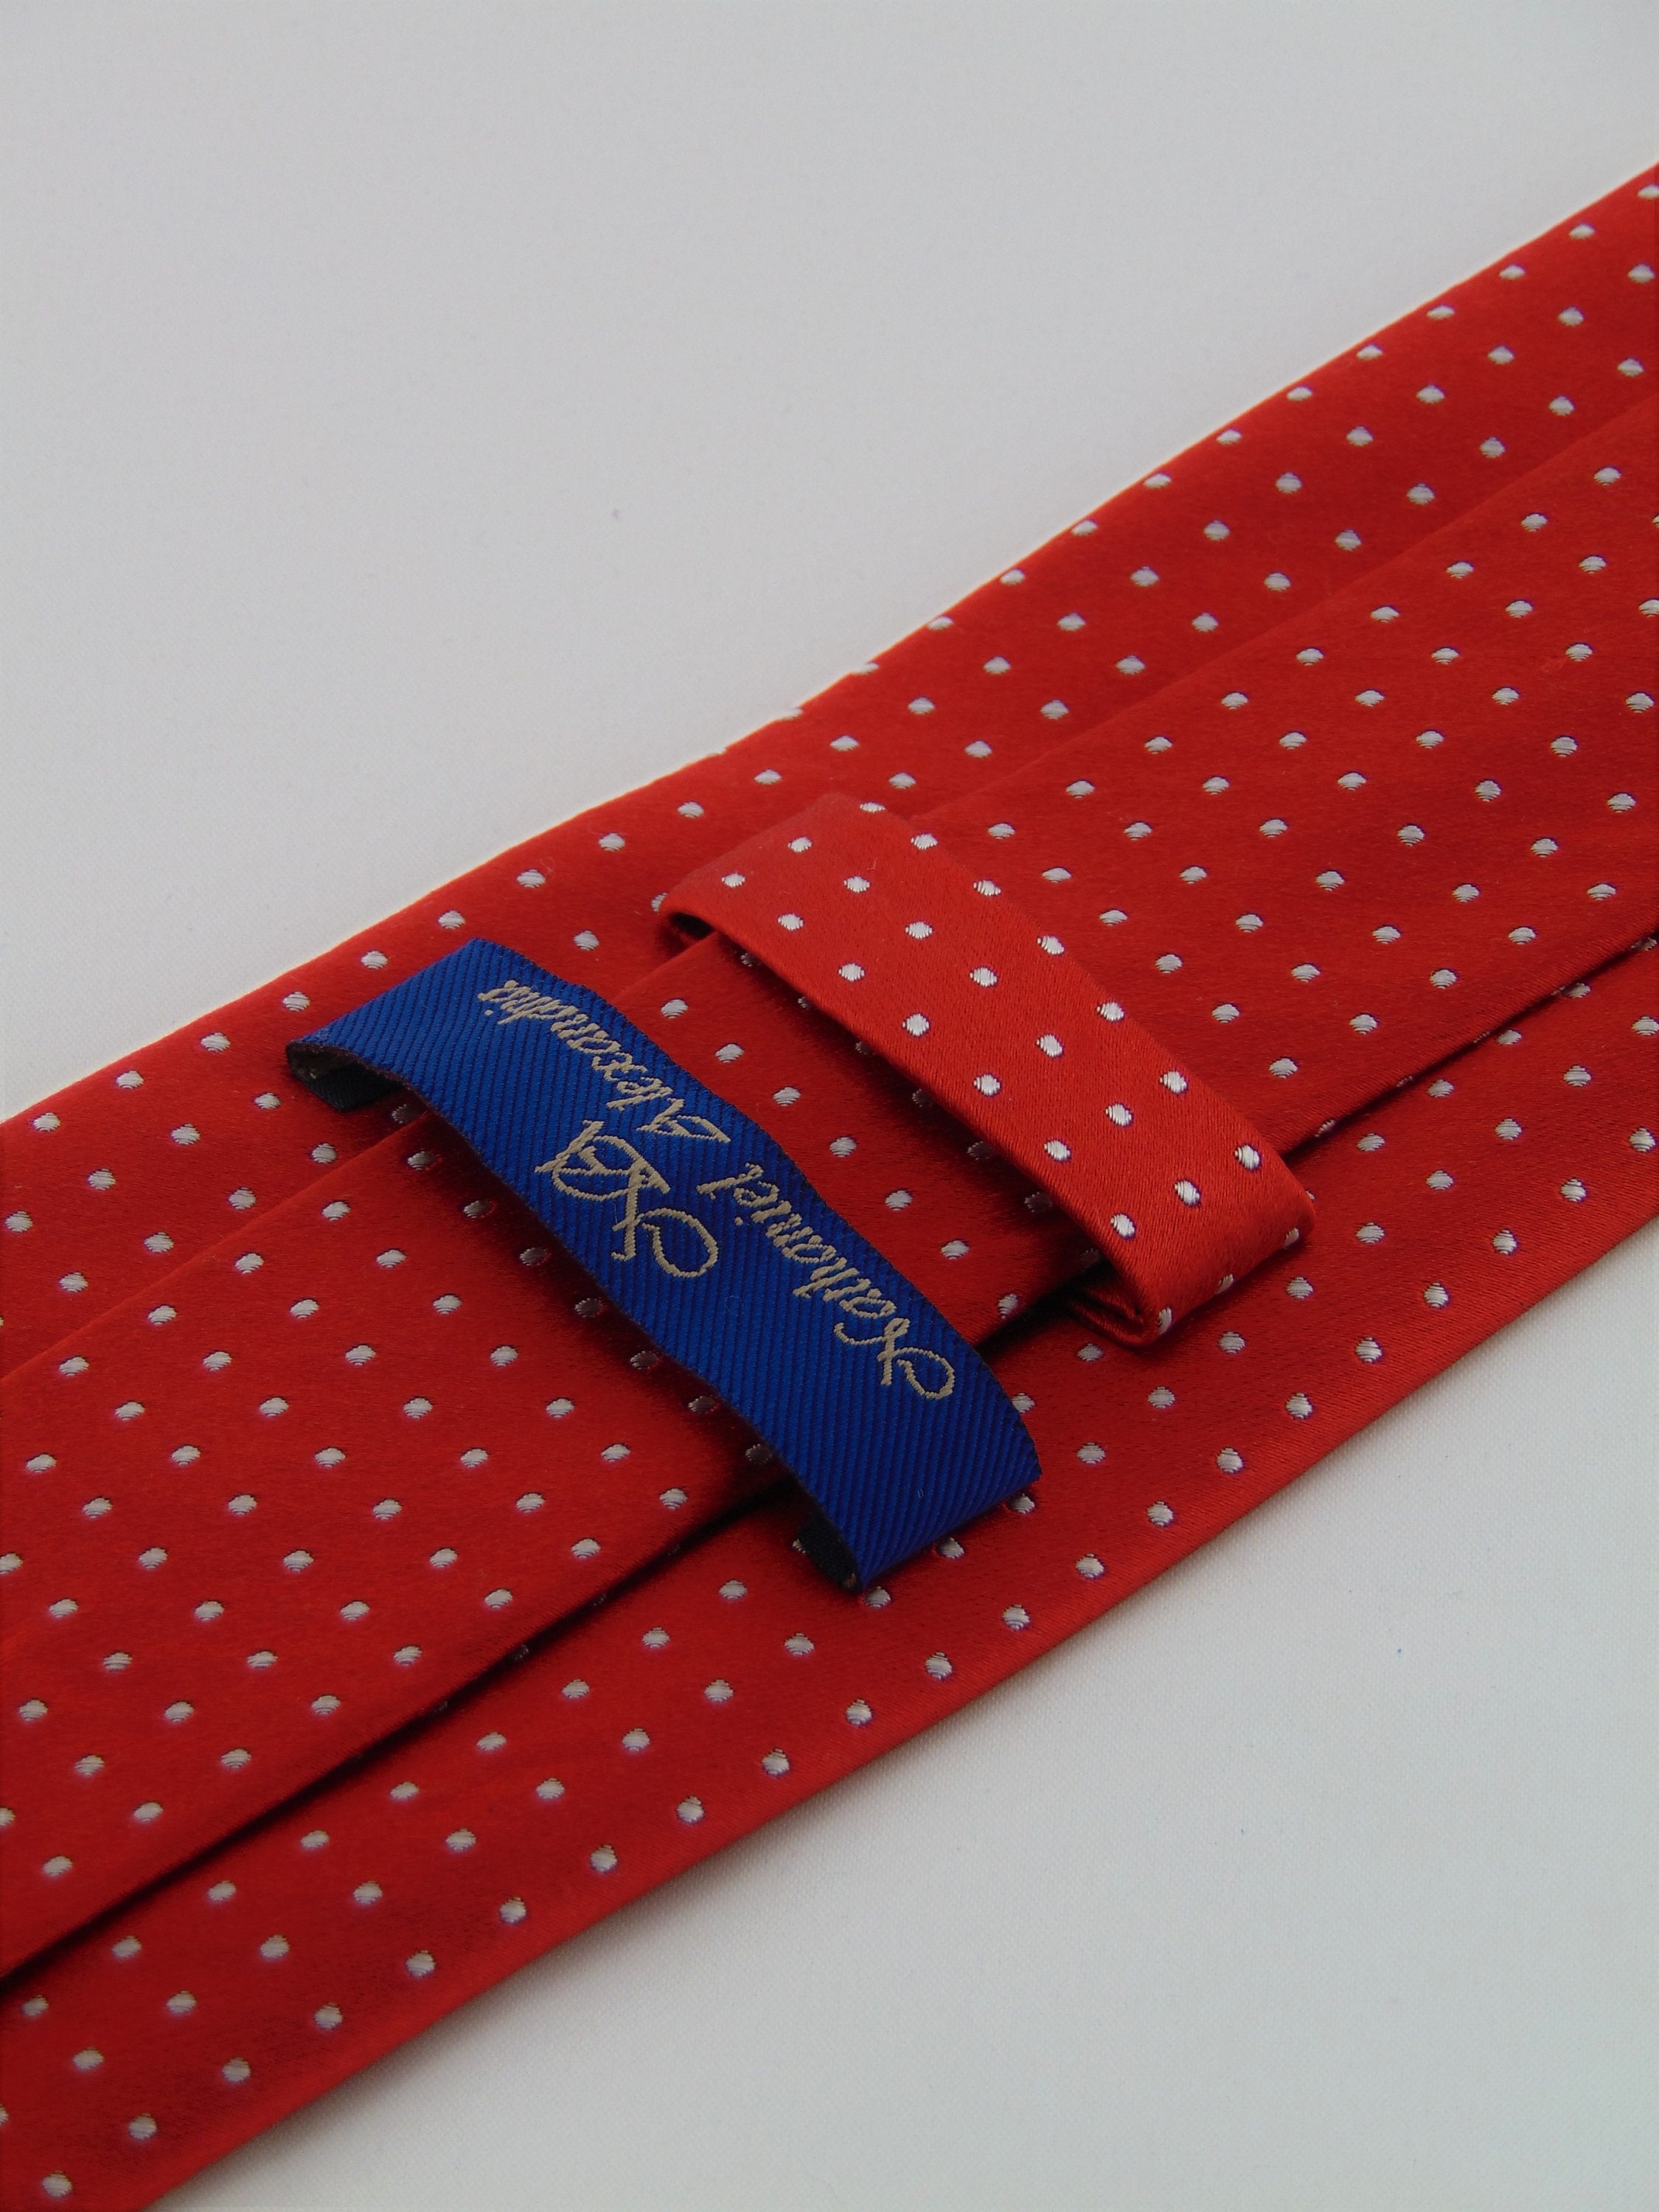 Wedding Tie for Dad Mens Wedding Necktie Red and White | Etsy